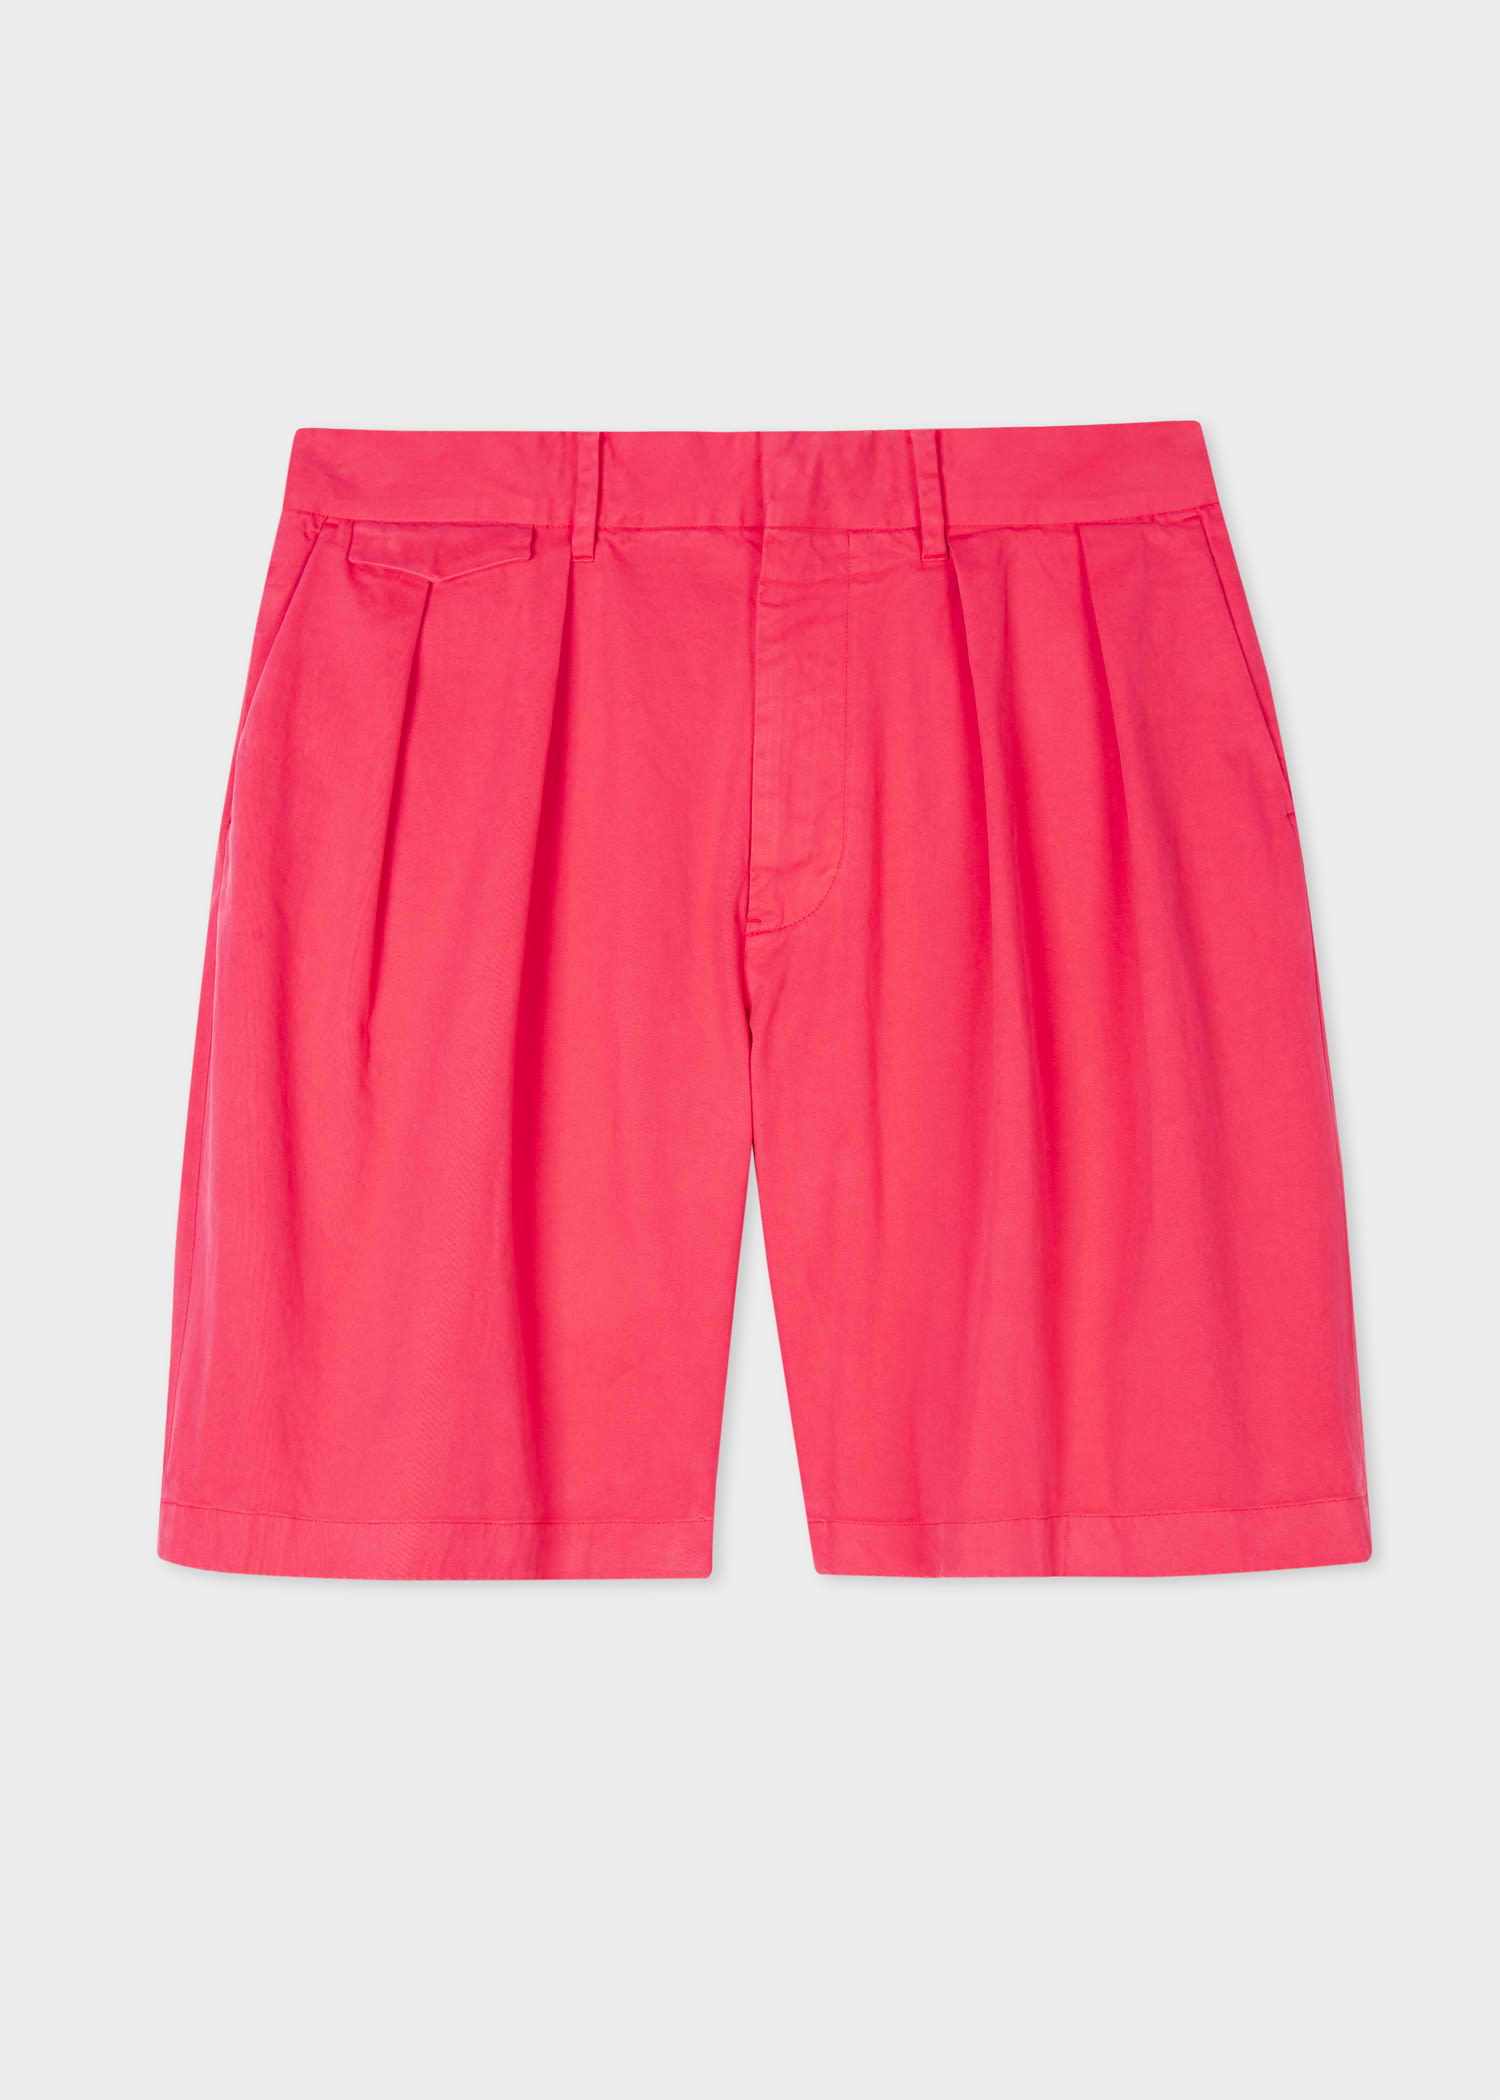 Men's Designer Cotton & Chino Shorts - Paul Smith US